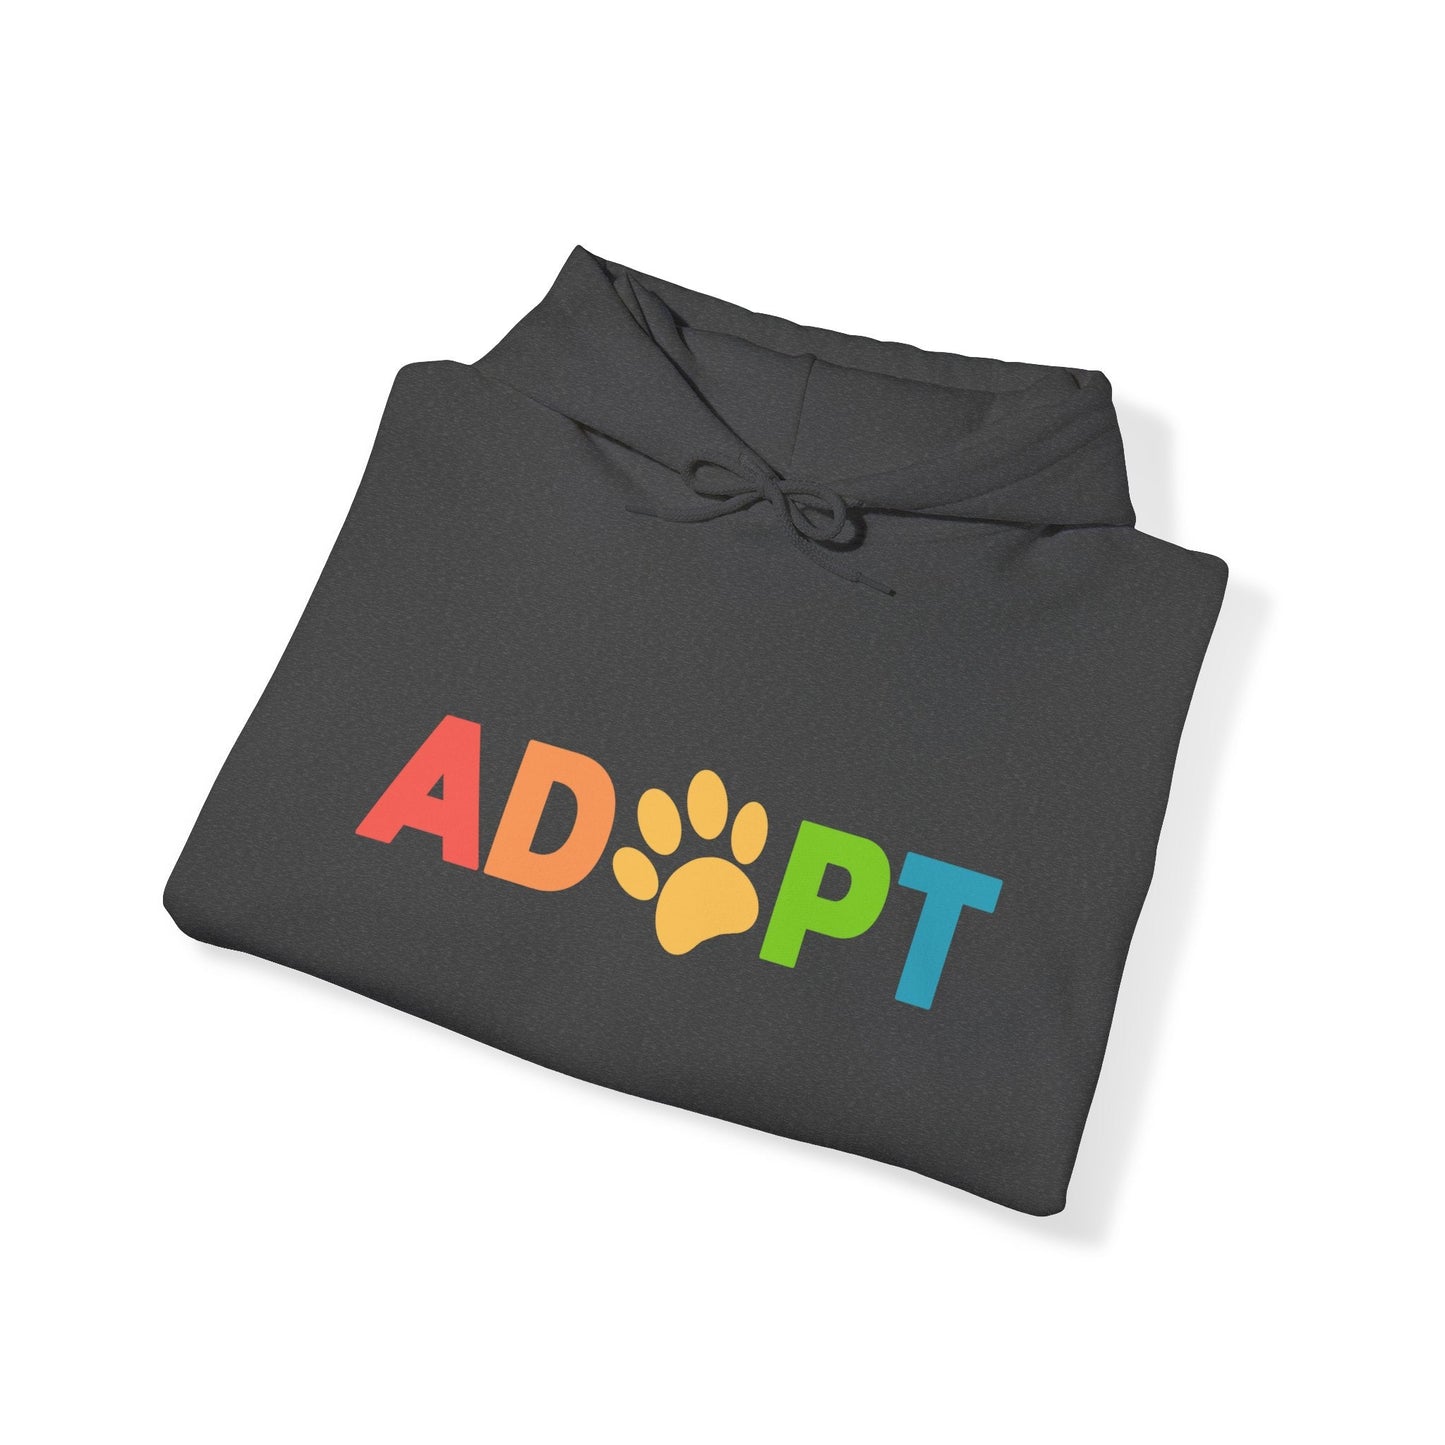 Adopt Rainbow | Hooded Sweatshirt - Detezi Designs-16631407721578312574